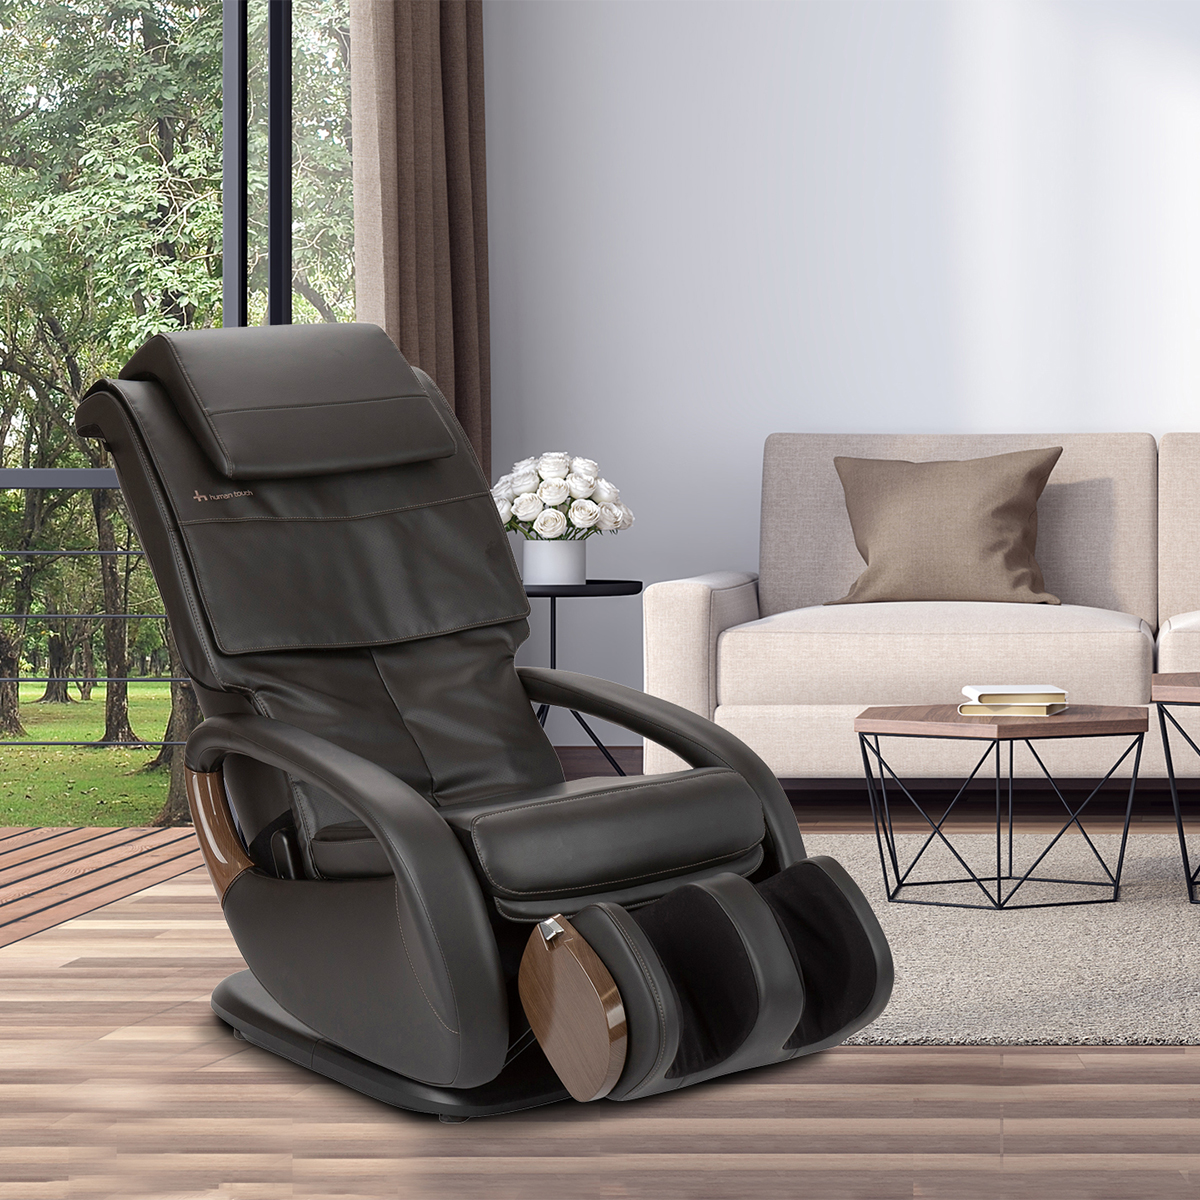 WholeBody 8.0 Massage Chair